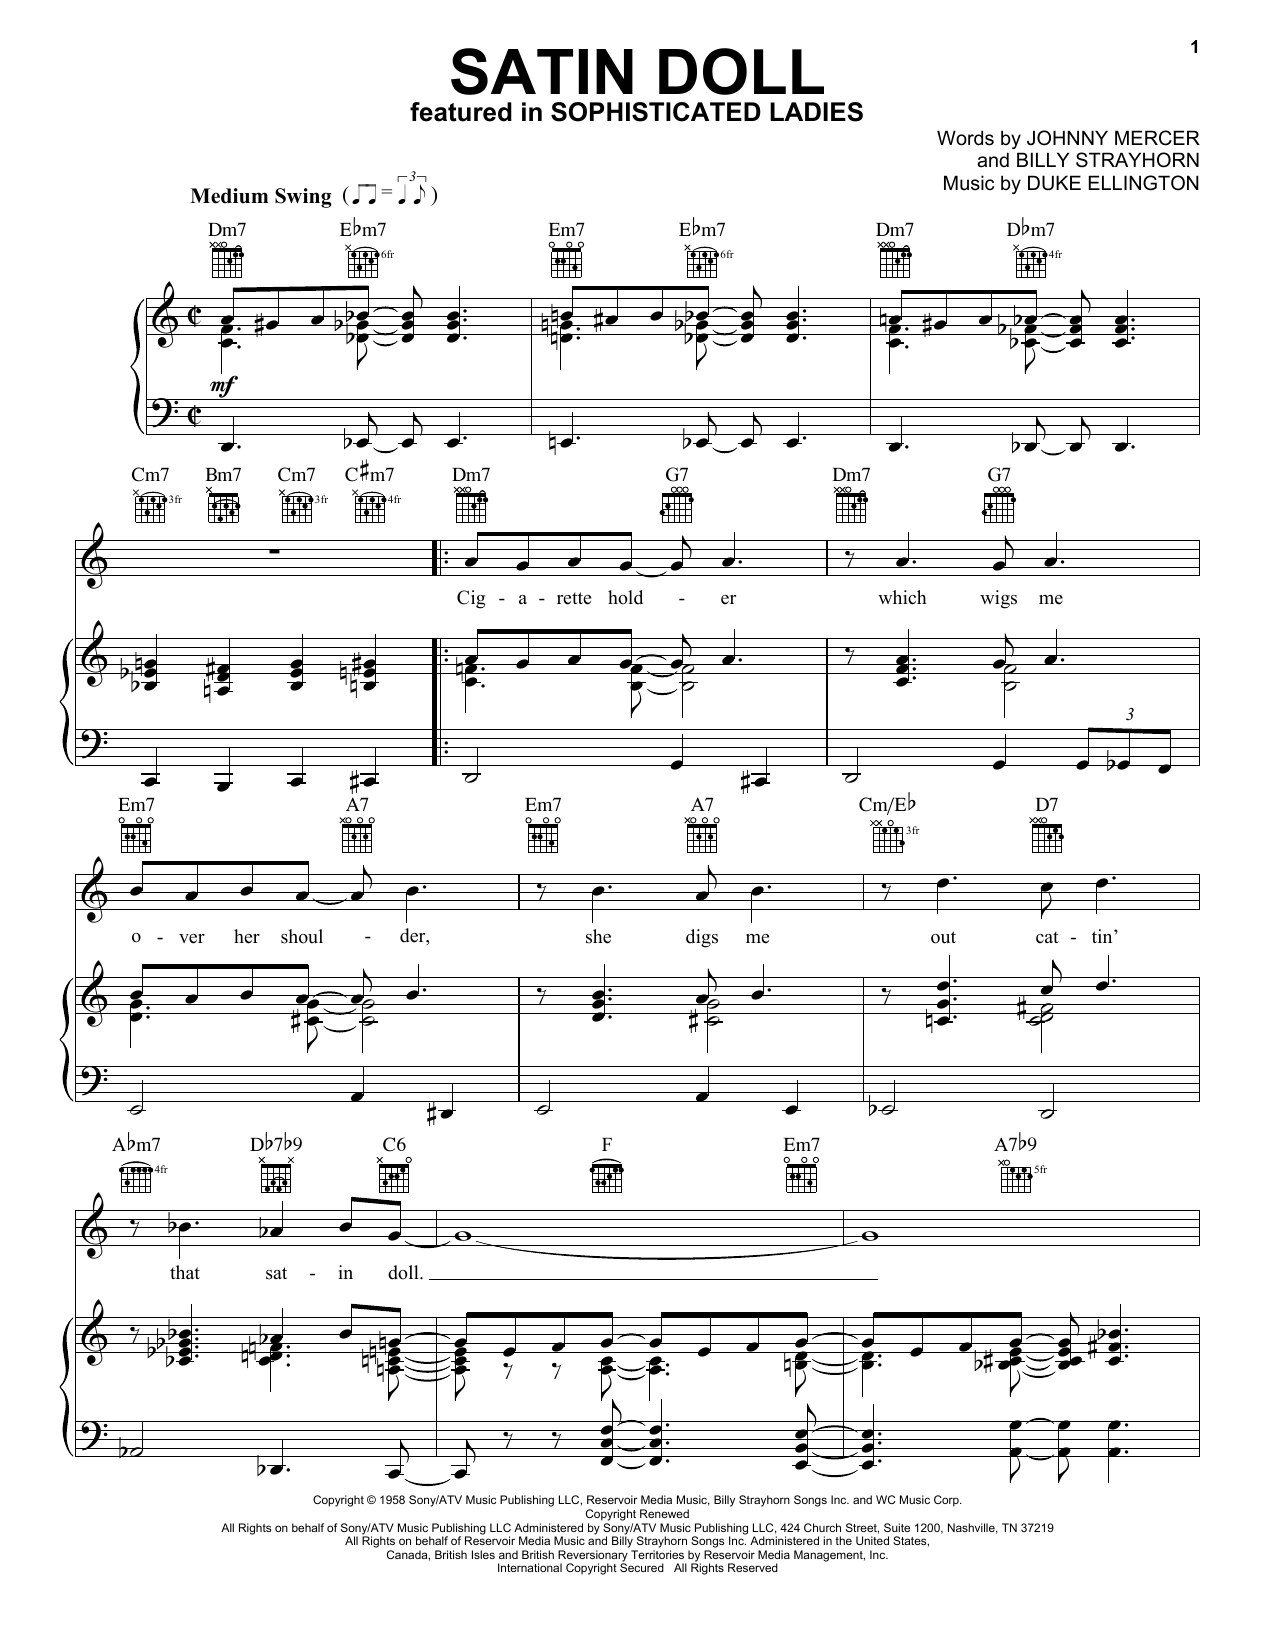 Duke Ellington Satin Doll Sheet Music Notes & Chords for Tenor Saxophone - Download or Print PDF